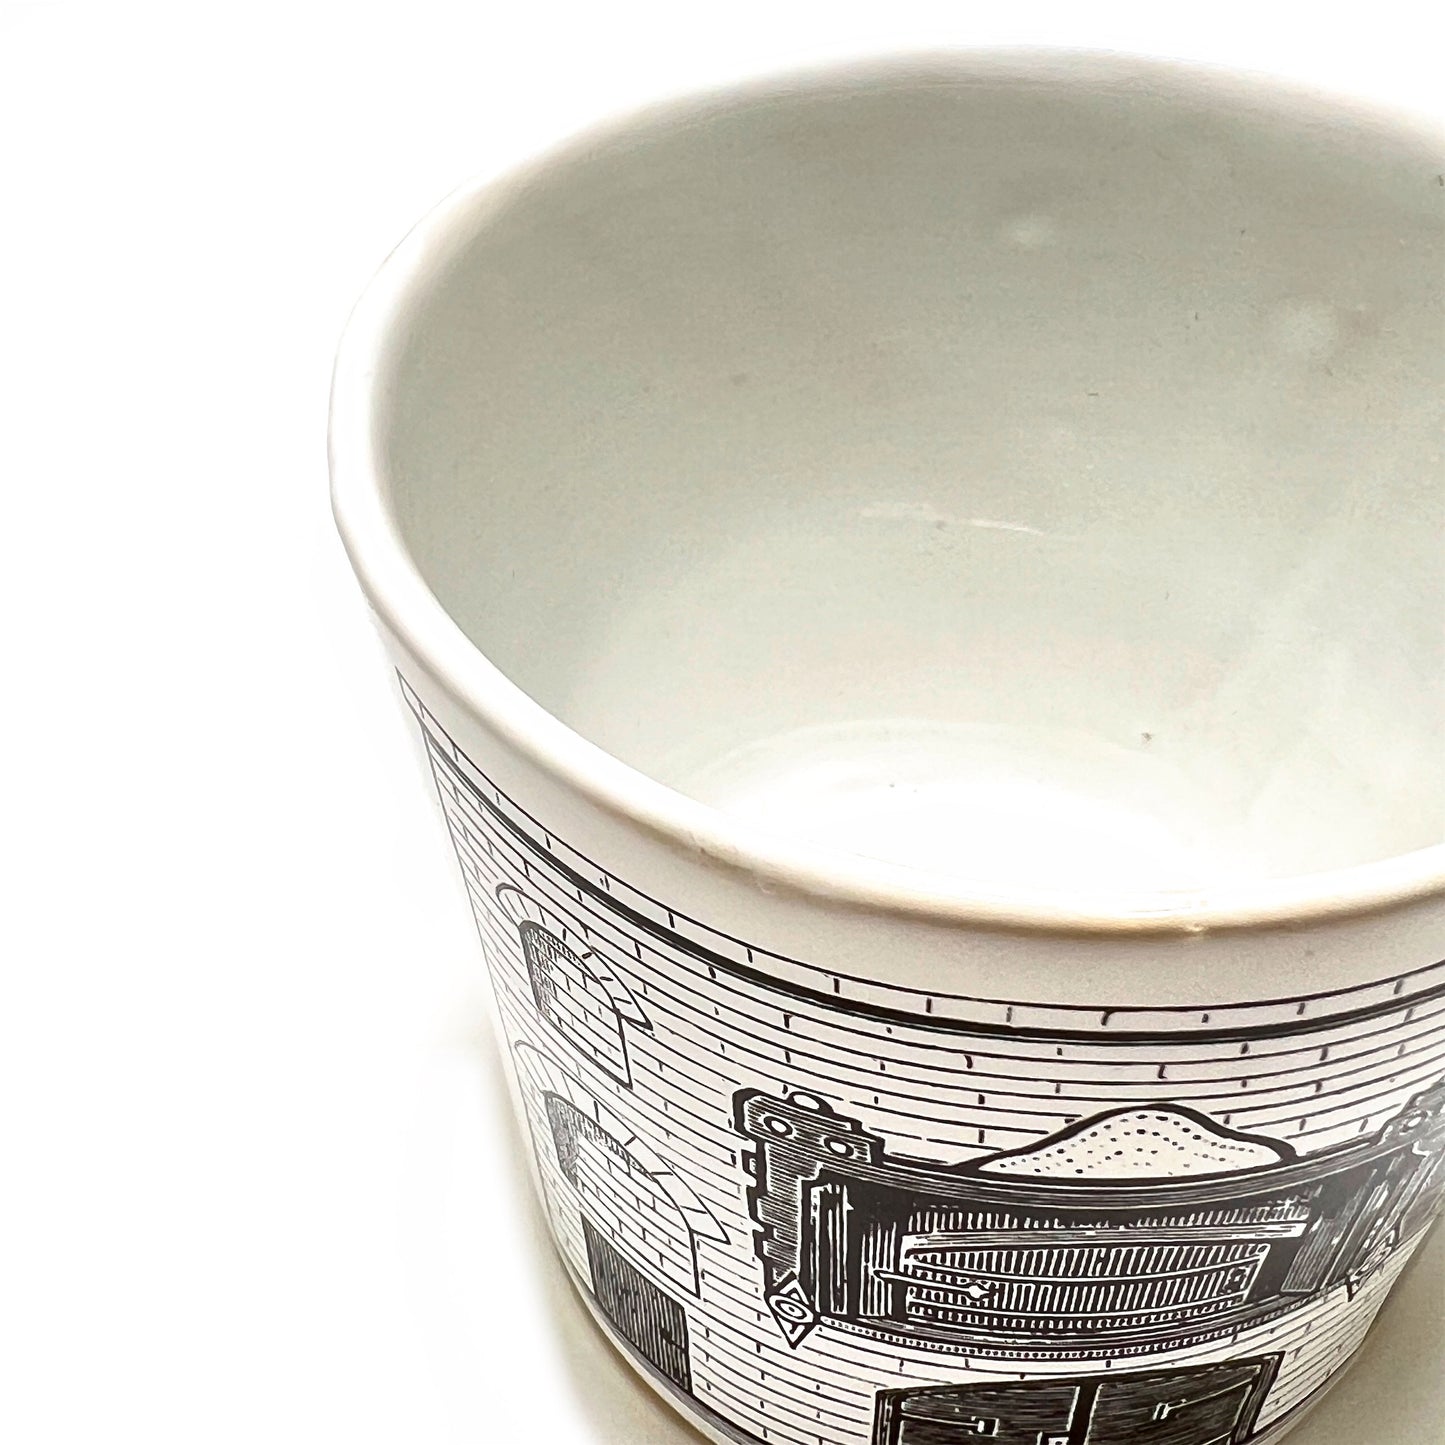 【Kuhn Keramik】ビックコーヒーカップ house